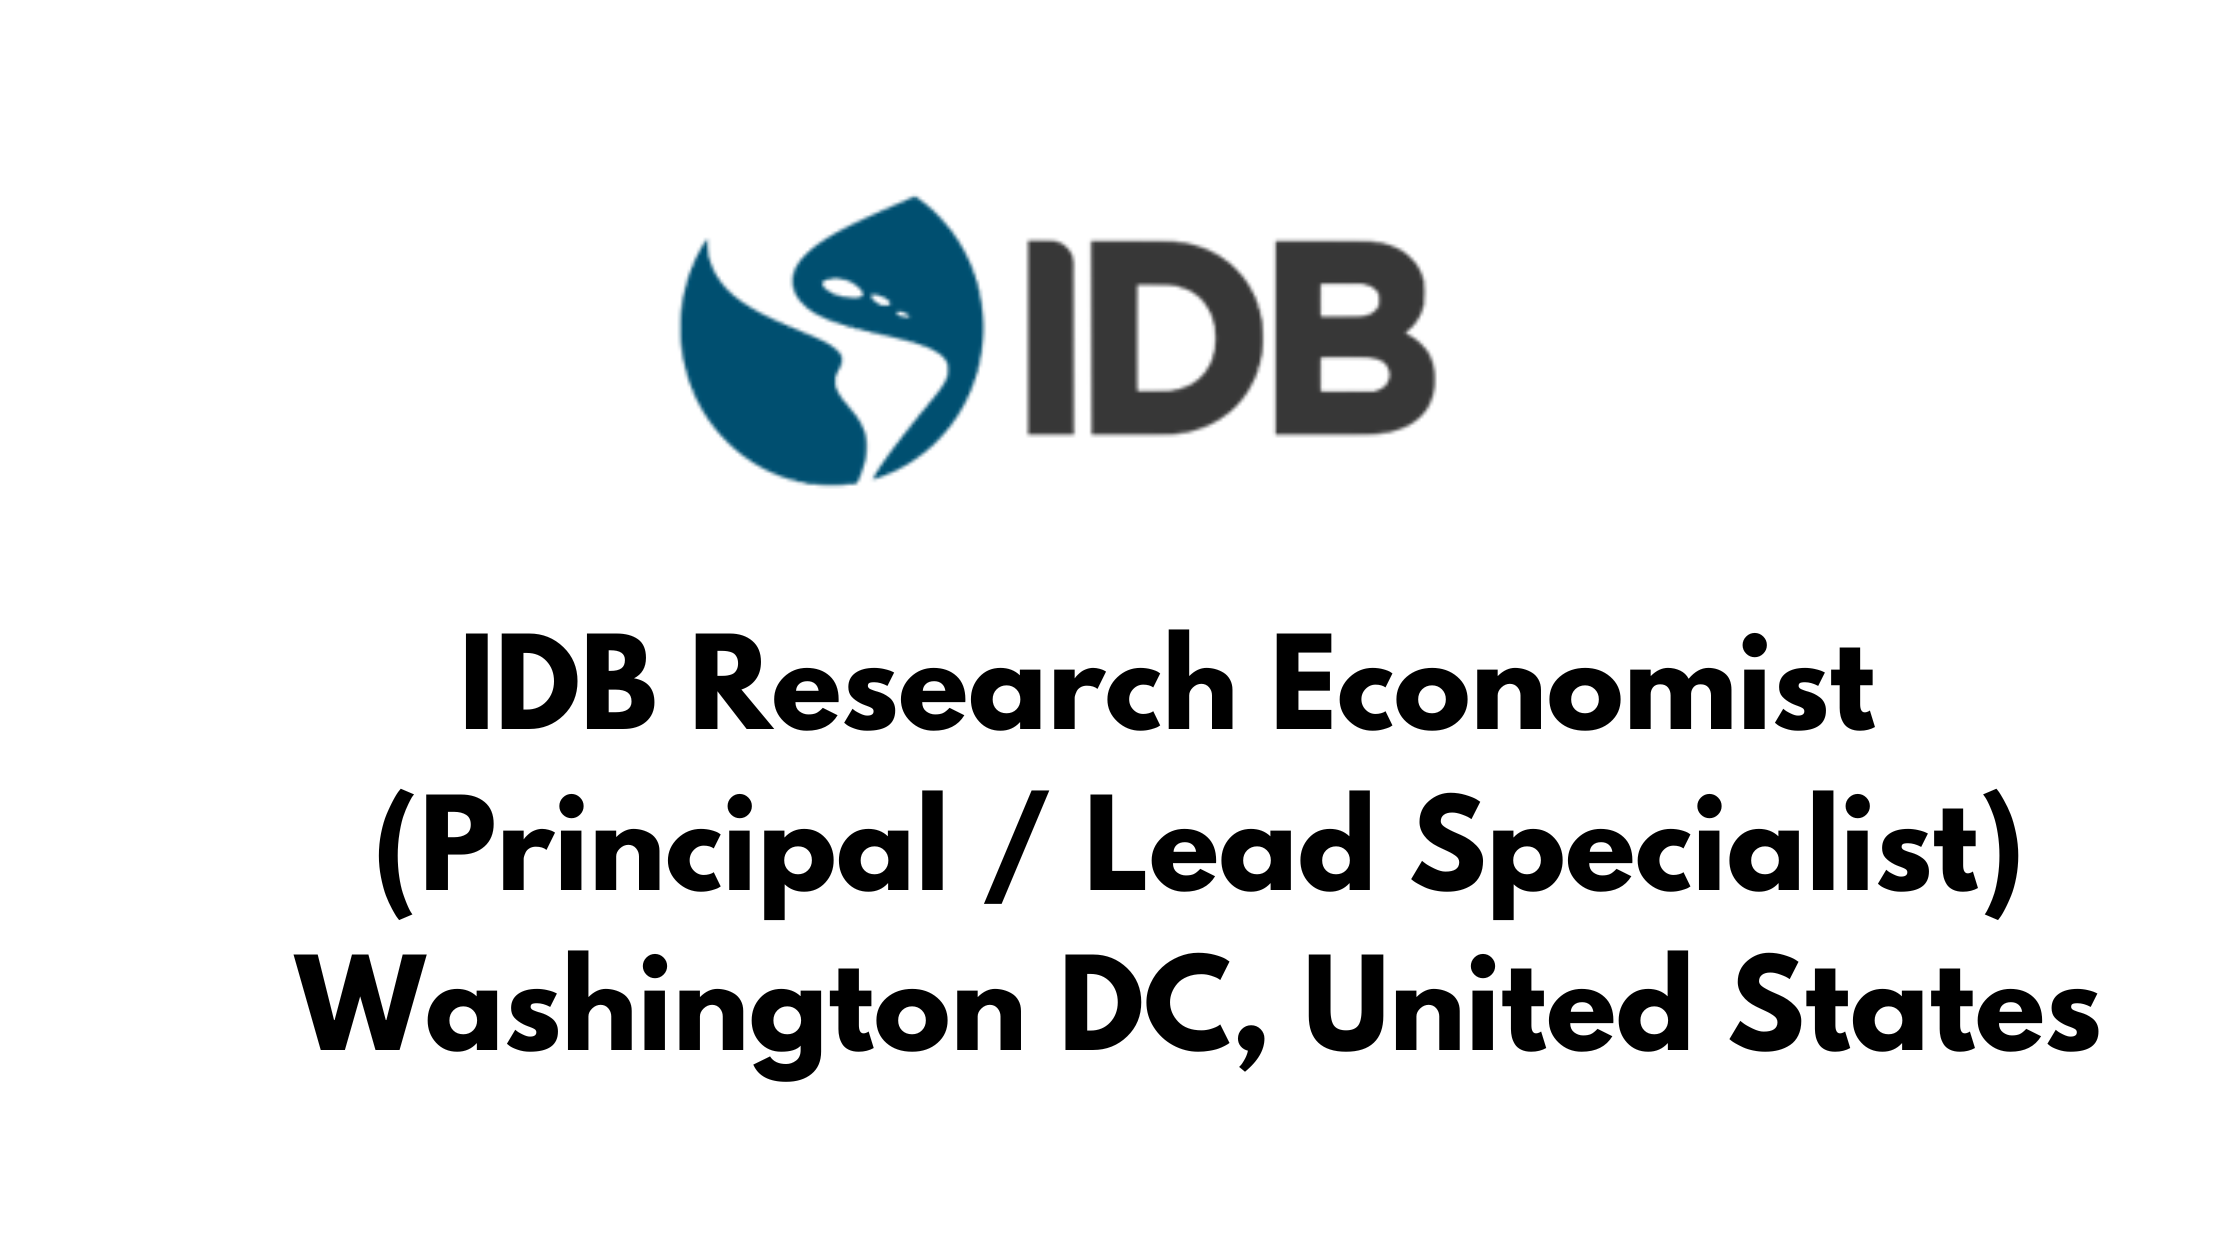 IDB Research Economist Job 
